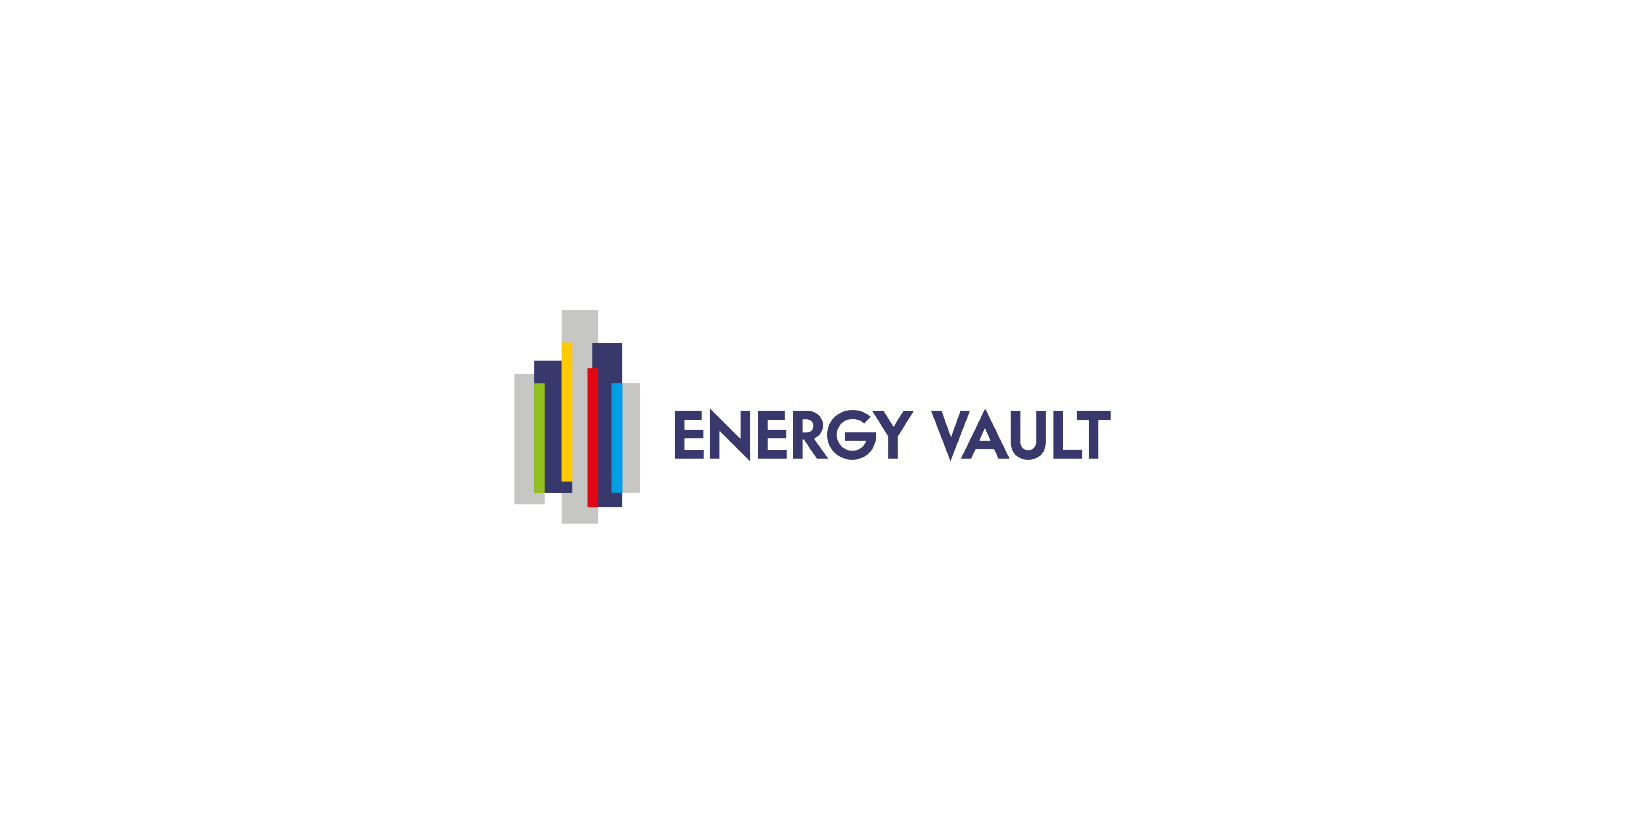 Vision Fund investment portfolio company Energy Vault's logo